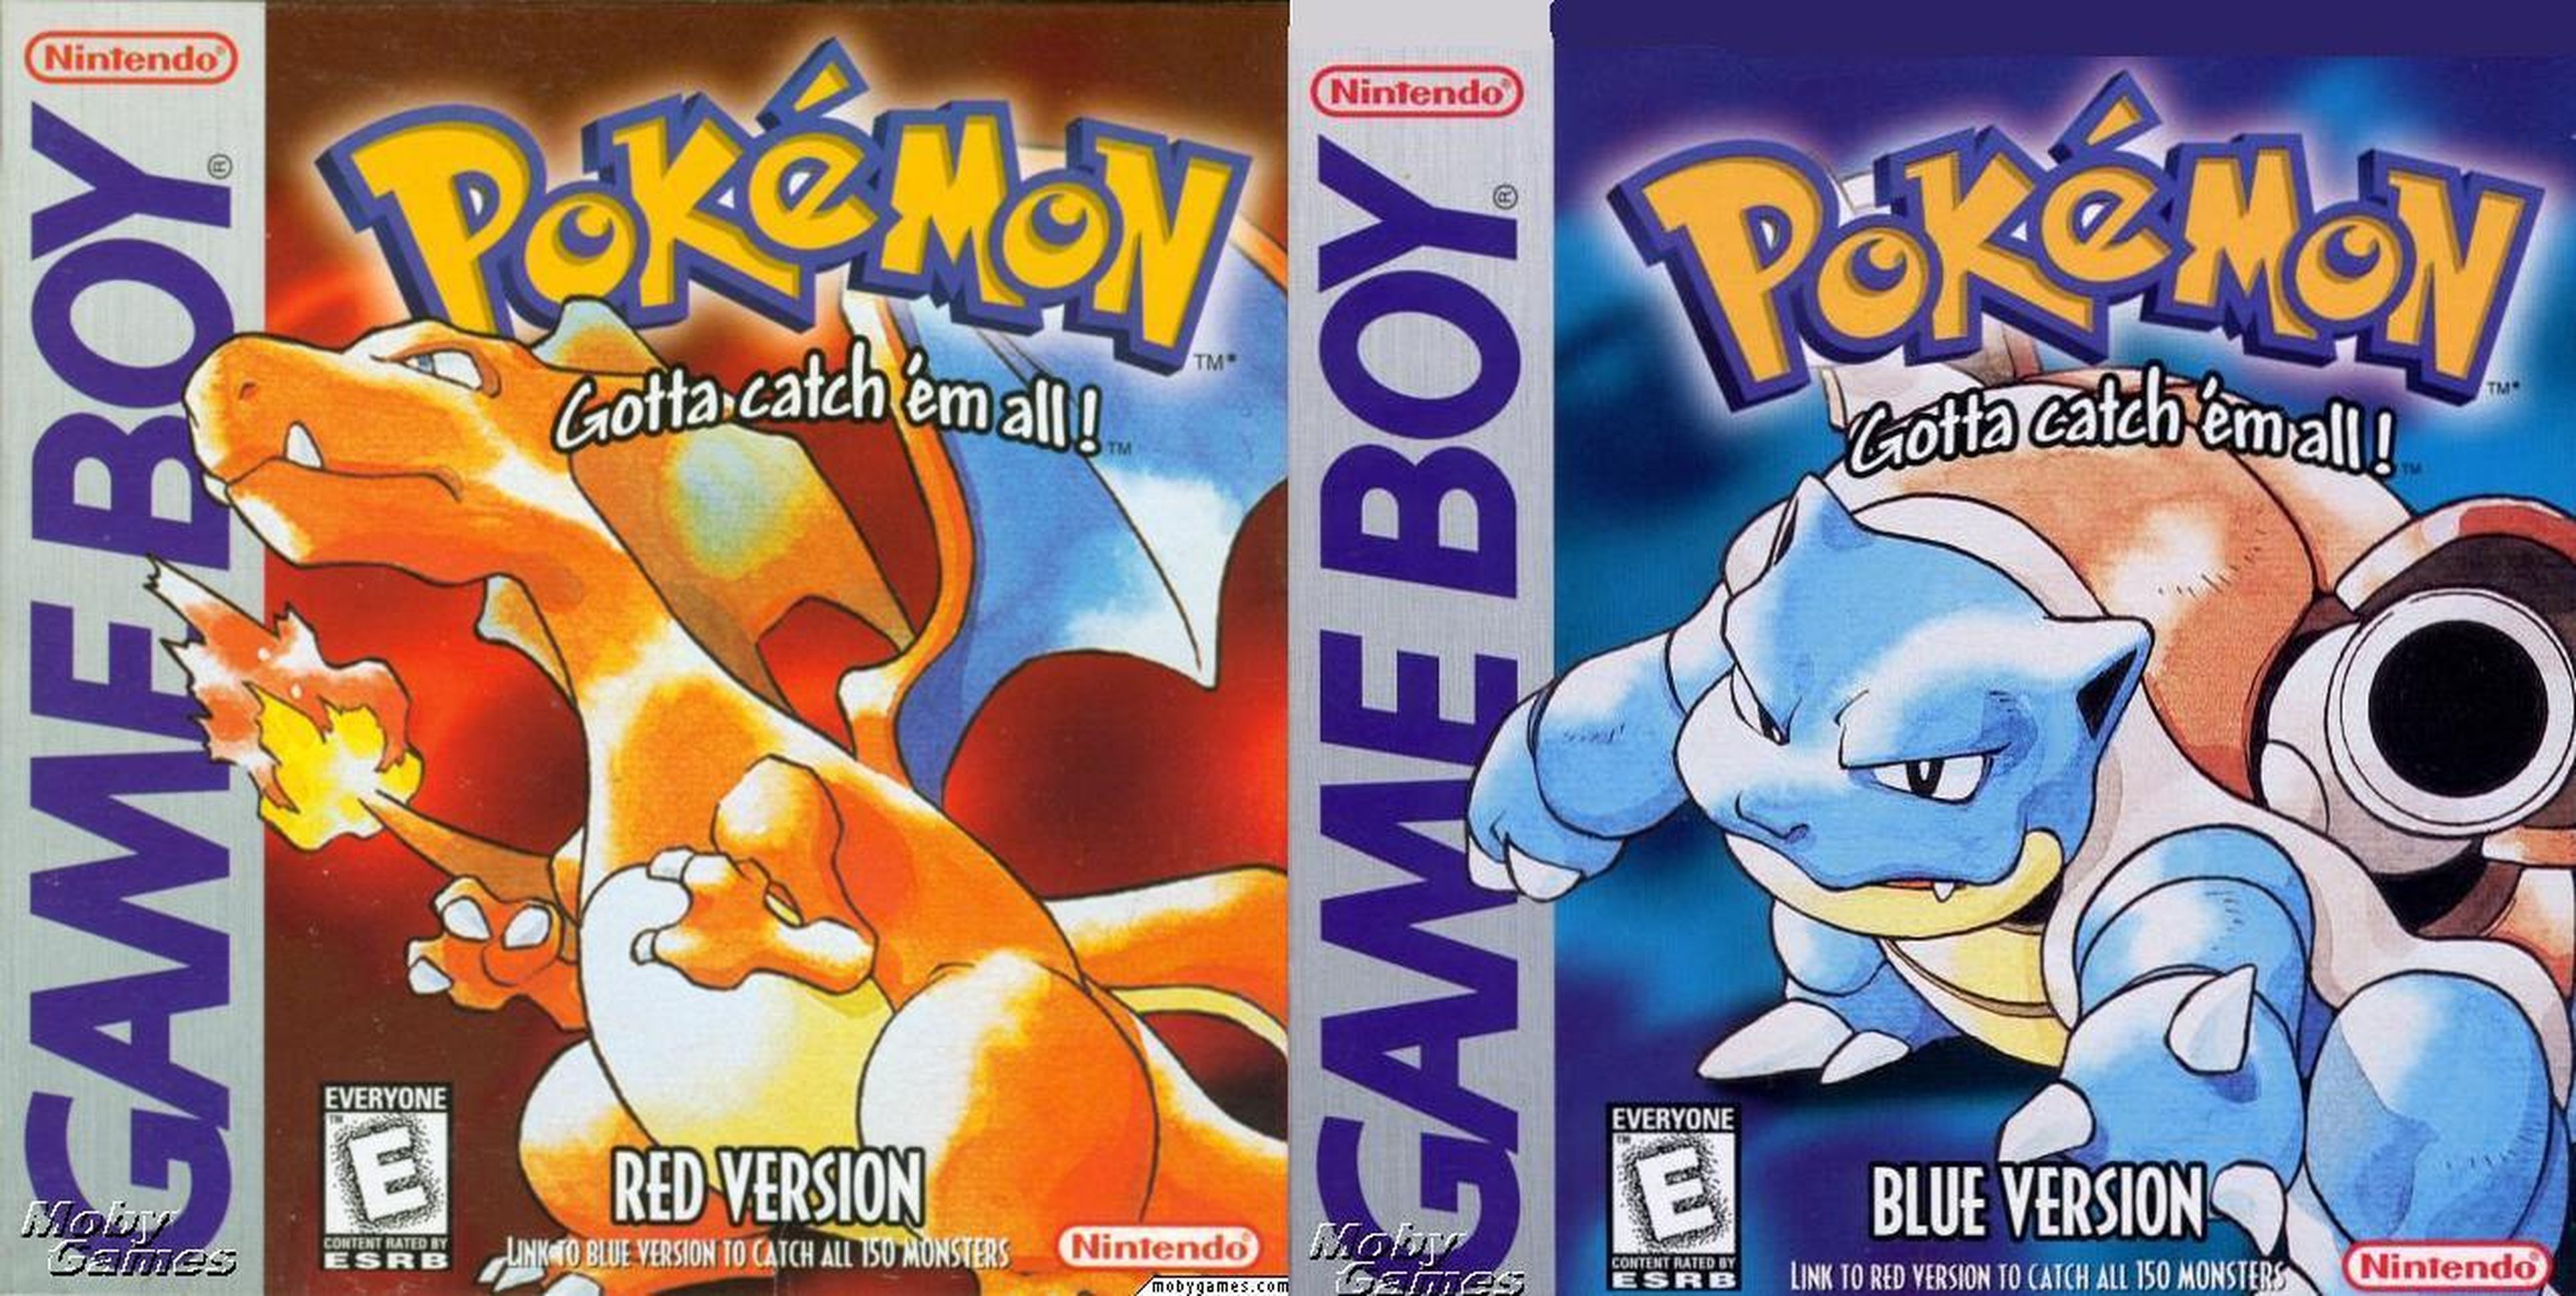 Pokémon cumple hoy 20 años